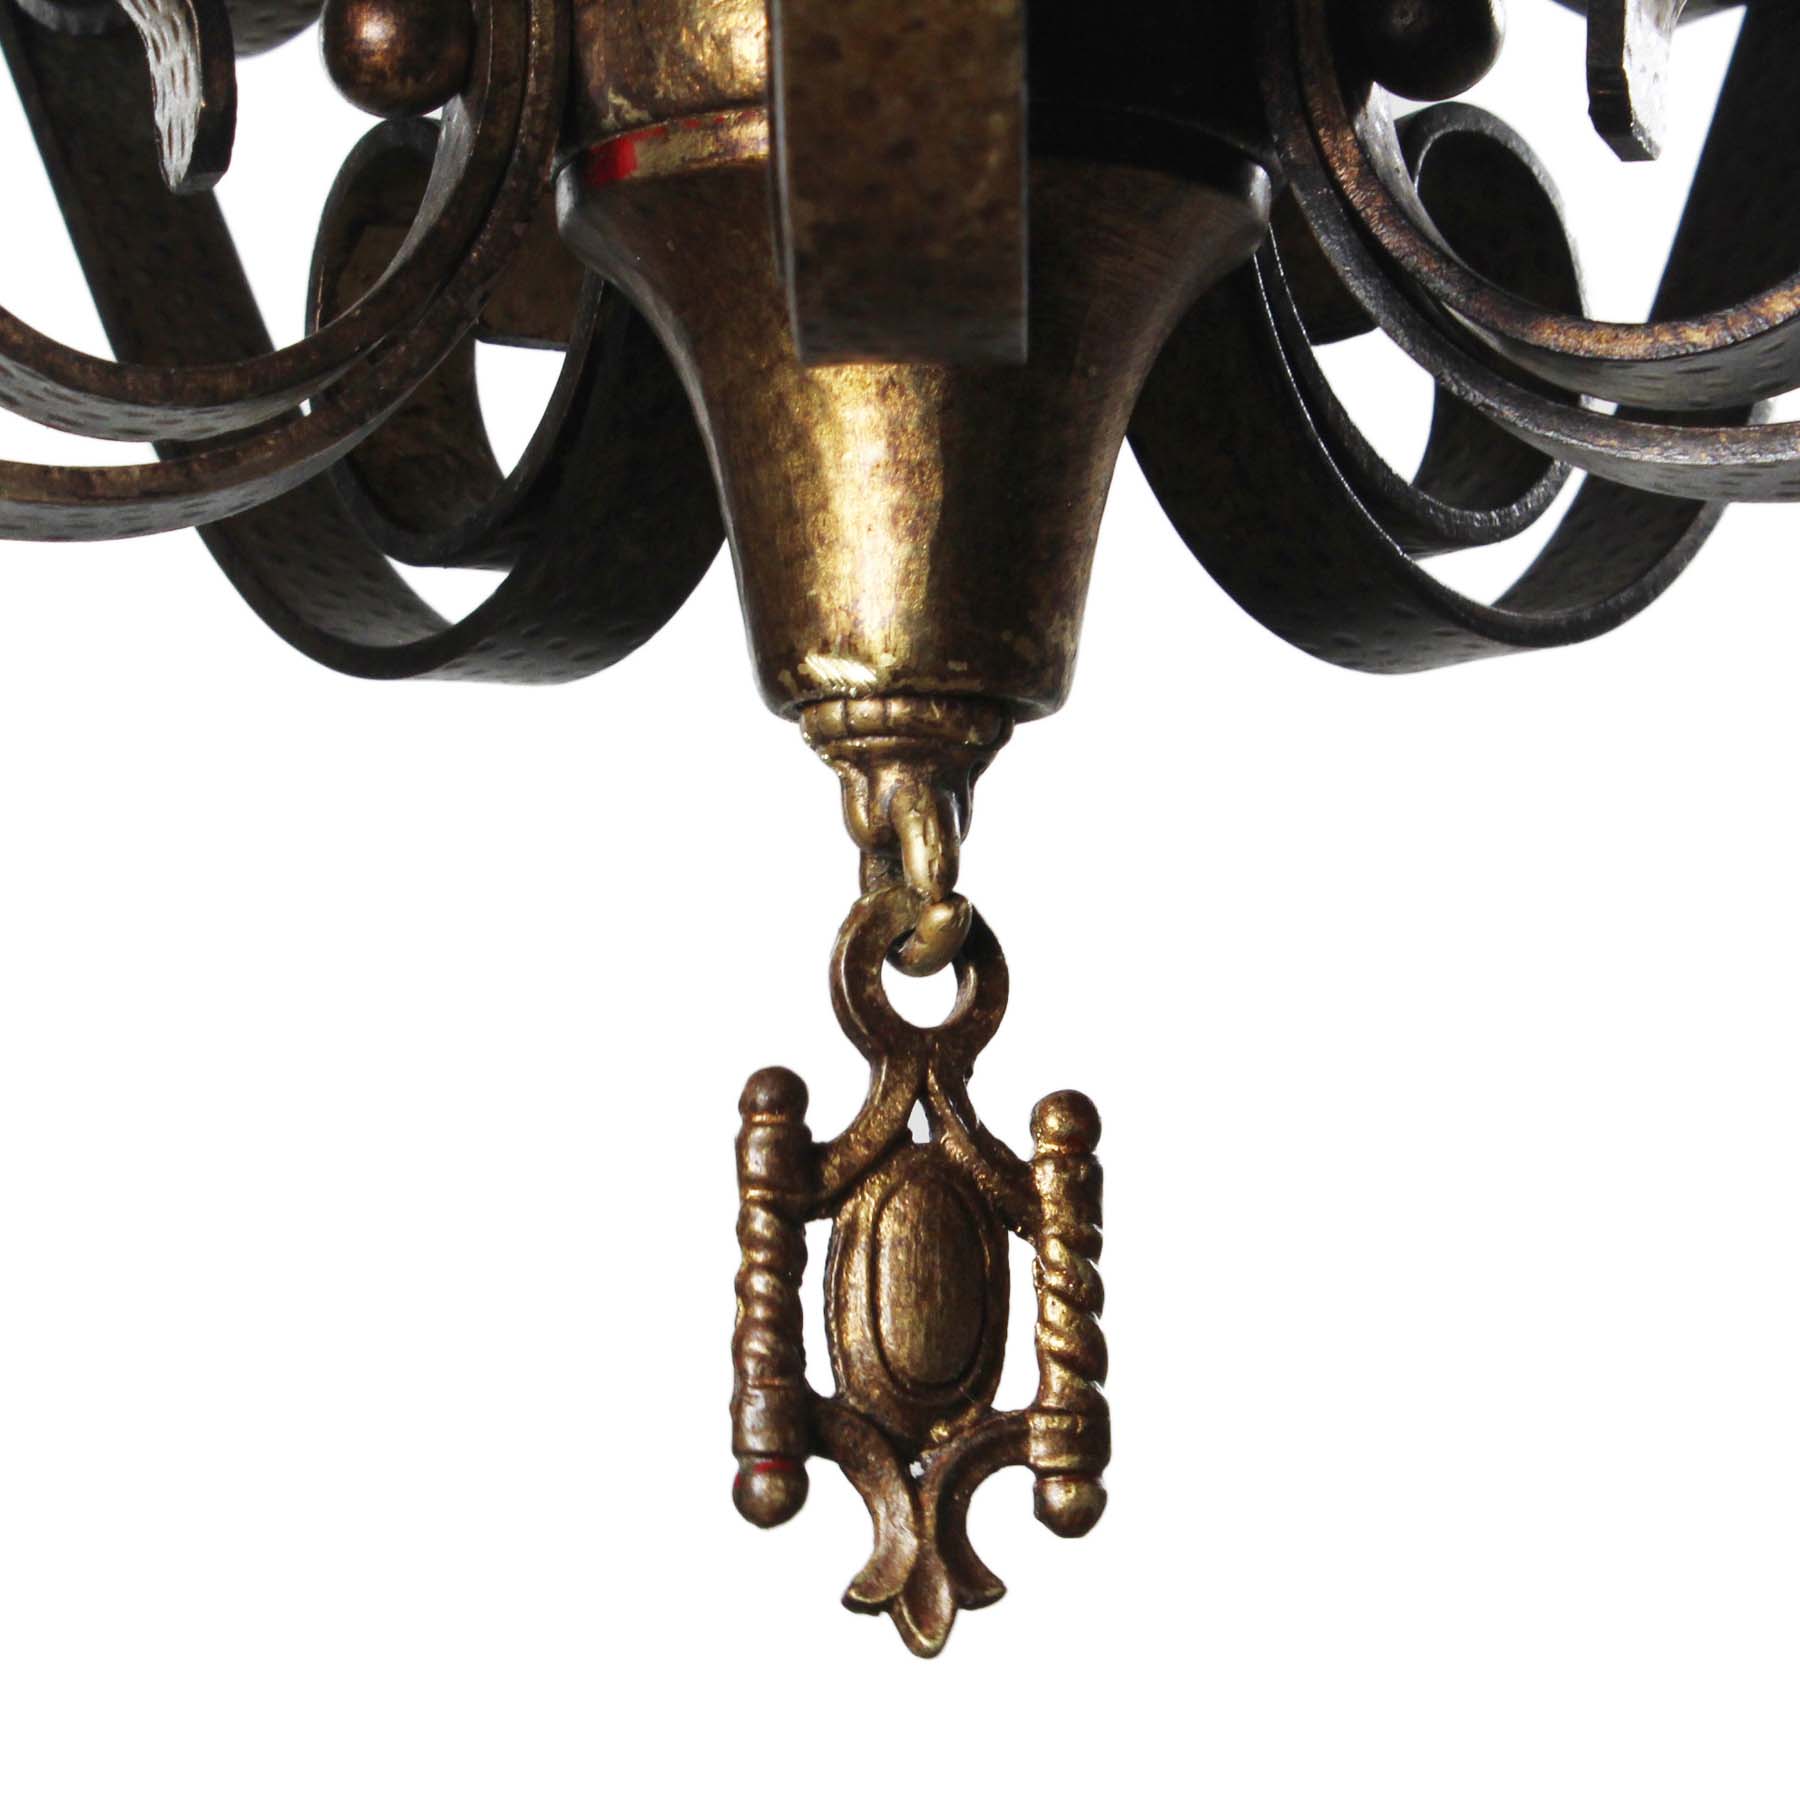 SOLD Antique Bronze Spanish Revival Five-Light Chandelier -69996